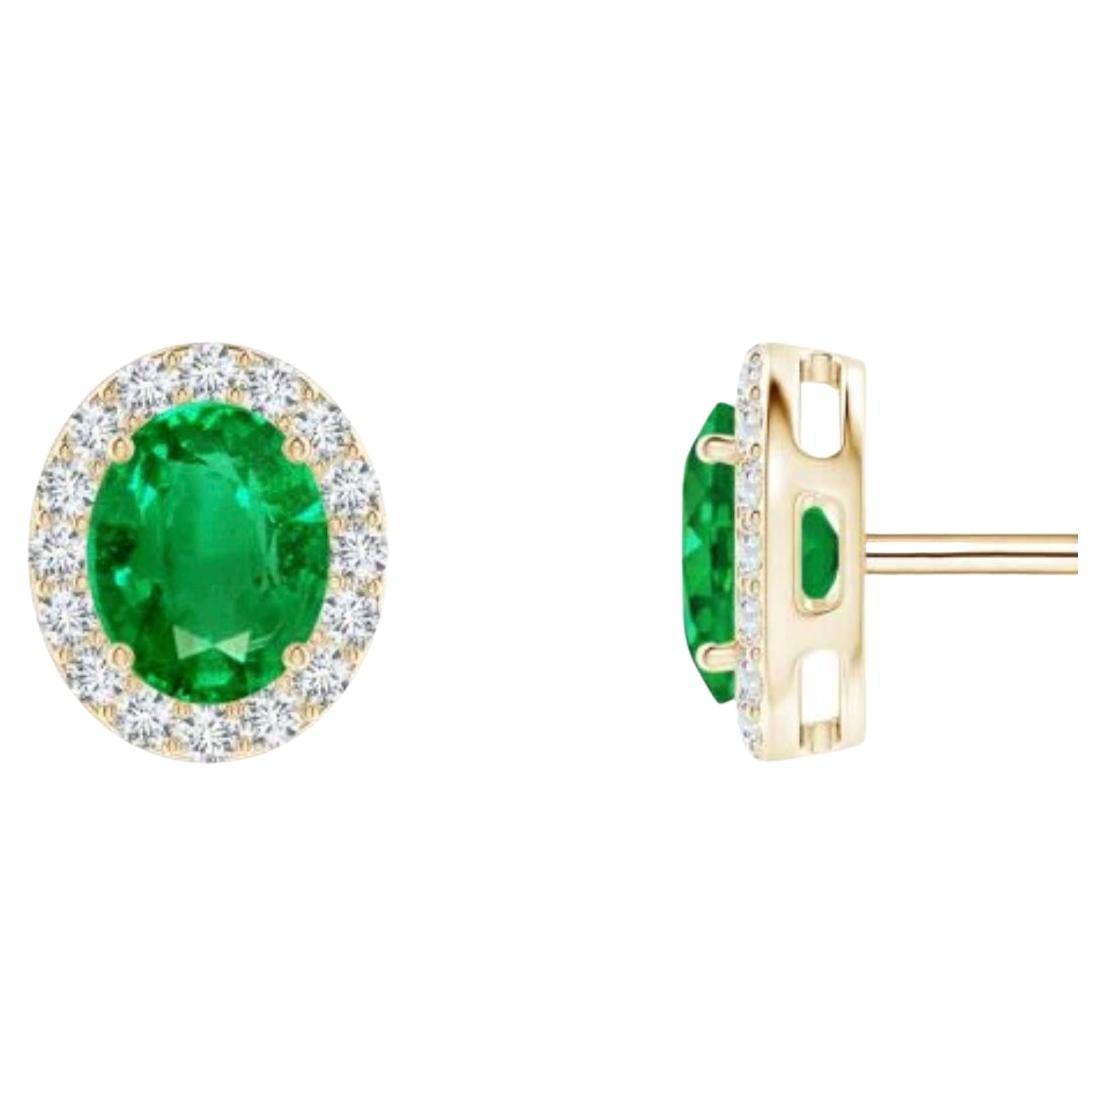 1 Carat Oval Natural Emerald and Diamond Stud Post Earrings 14 Karat Yellow Gold